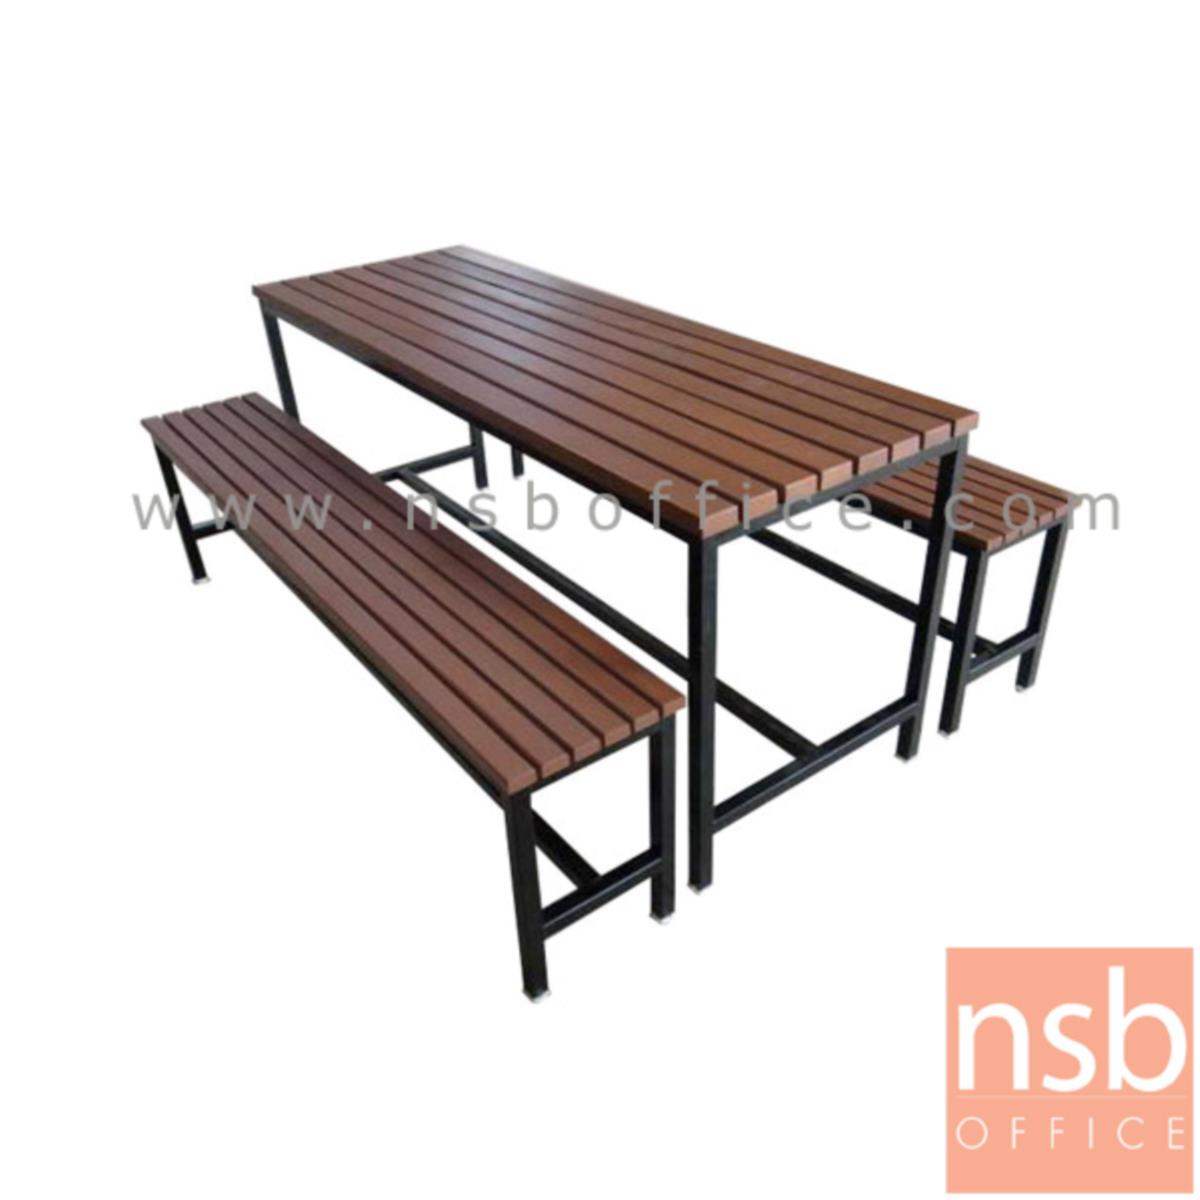 G14A109:ชุดโต๊ะและเก้าอี้รับประทานอาหารไม้ยางพาราทำสีสักทอง  ขนาด 120W,150W,180W cm.  พร้อมเก้าอี้ 